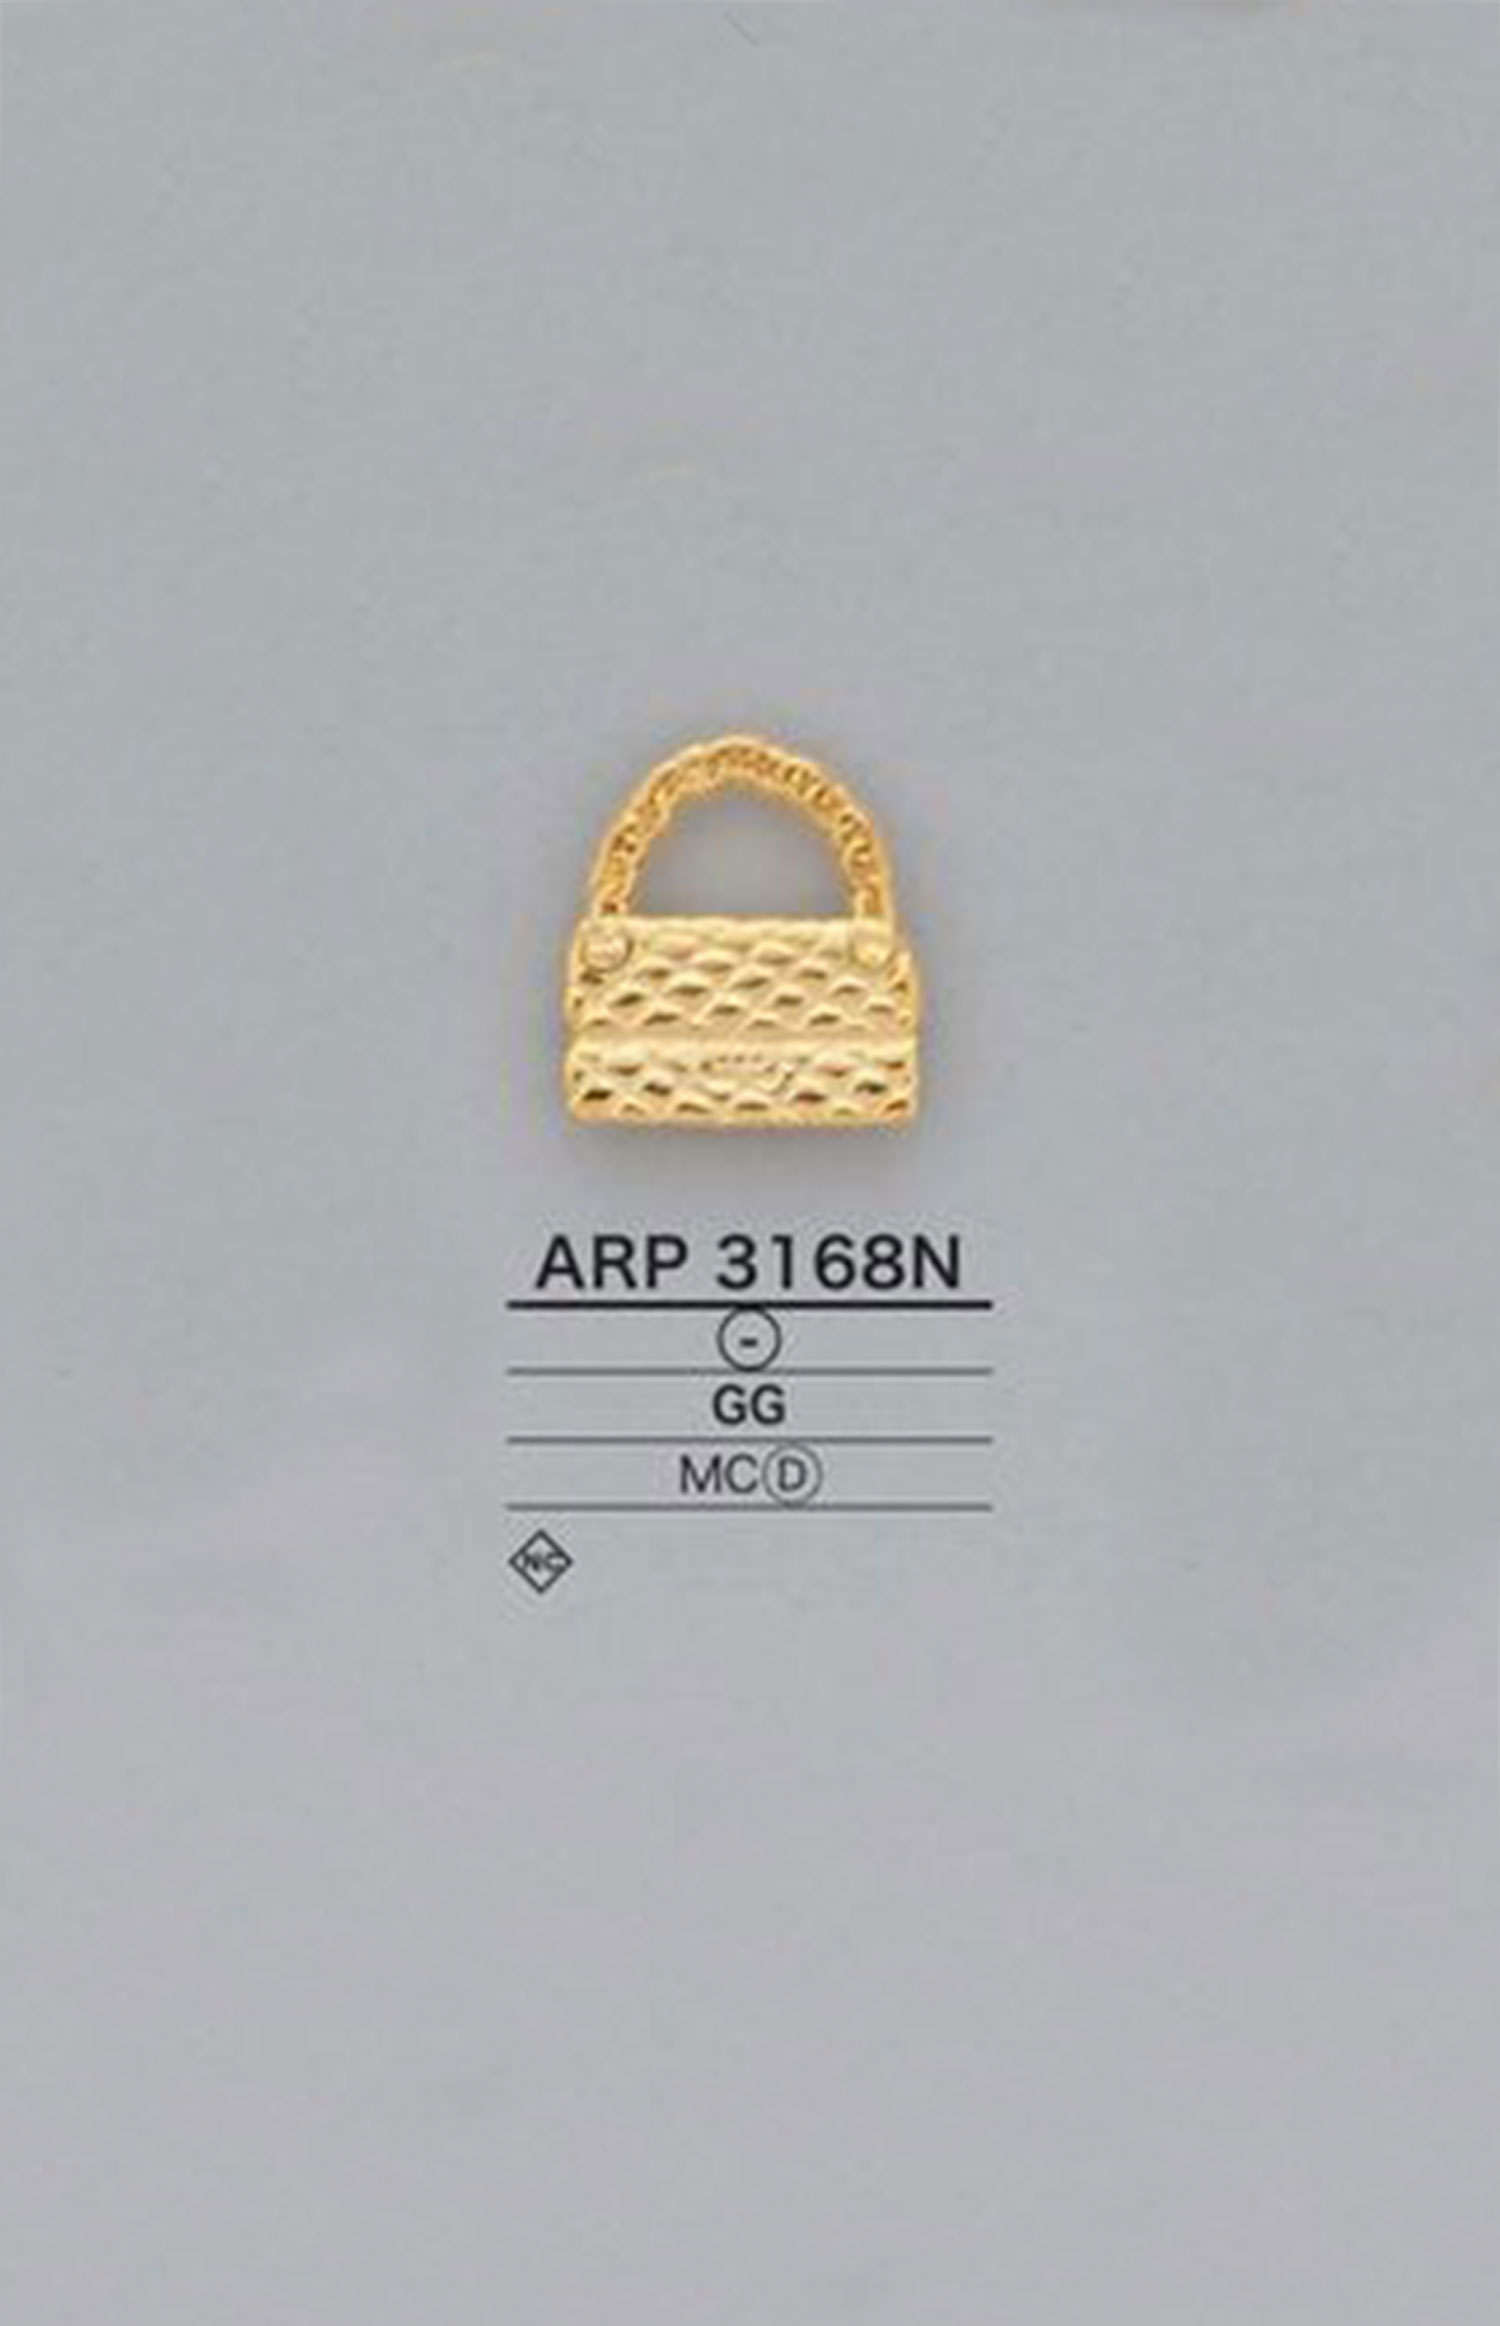 ARP3168N 箱包型图形元素零件[杂货等] 爱丽丝纽扣